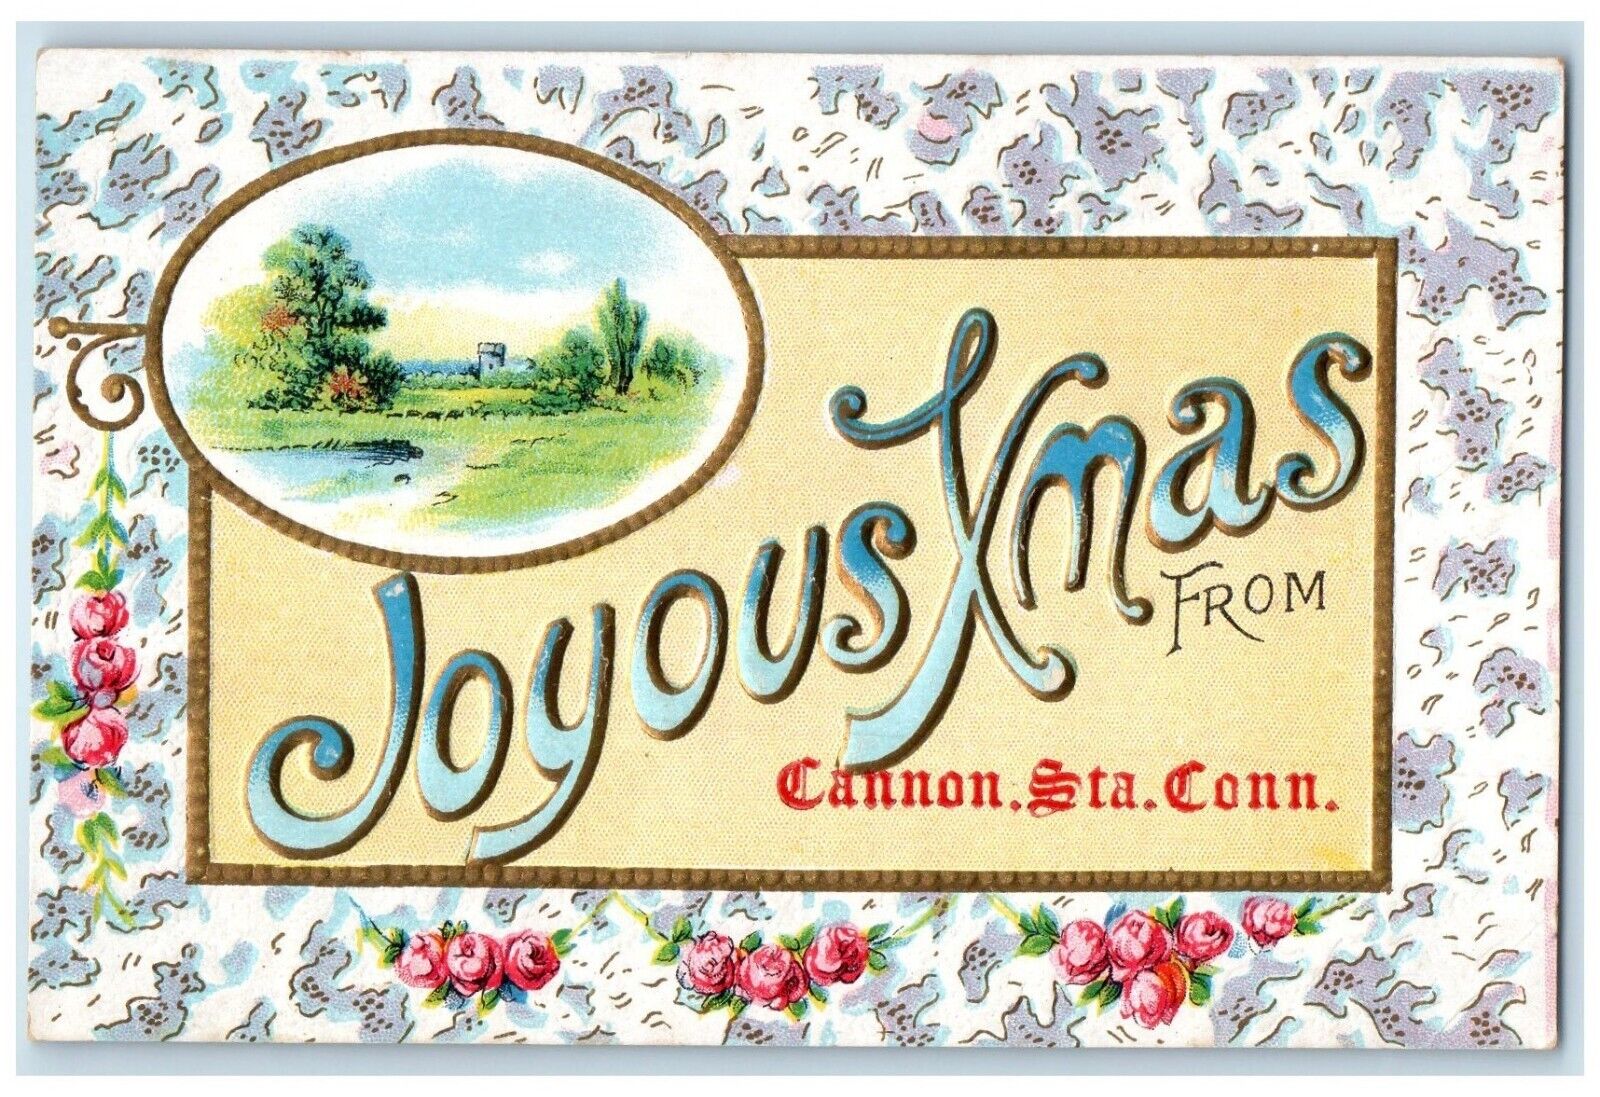 c1910 Joyous Xmas Christmas Cannon Station Connecticut Embossed Vintage Postcard